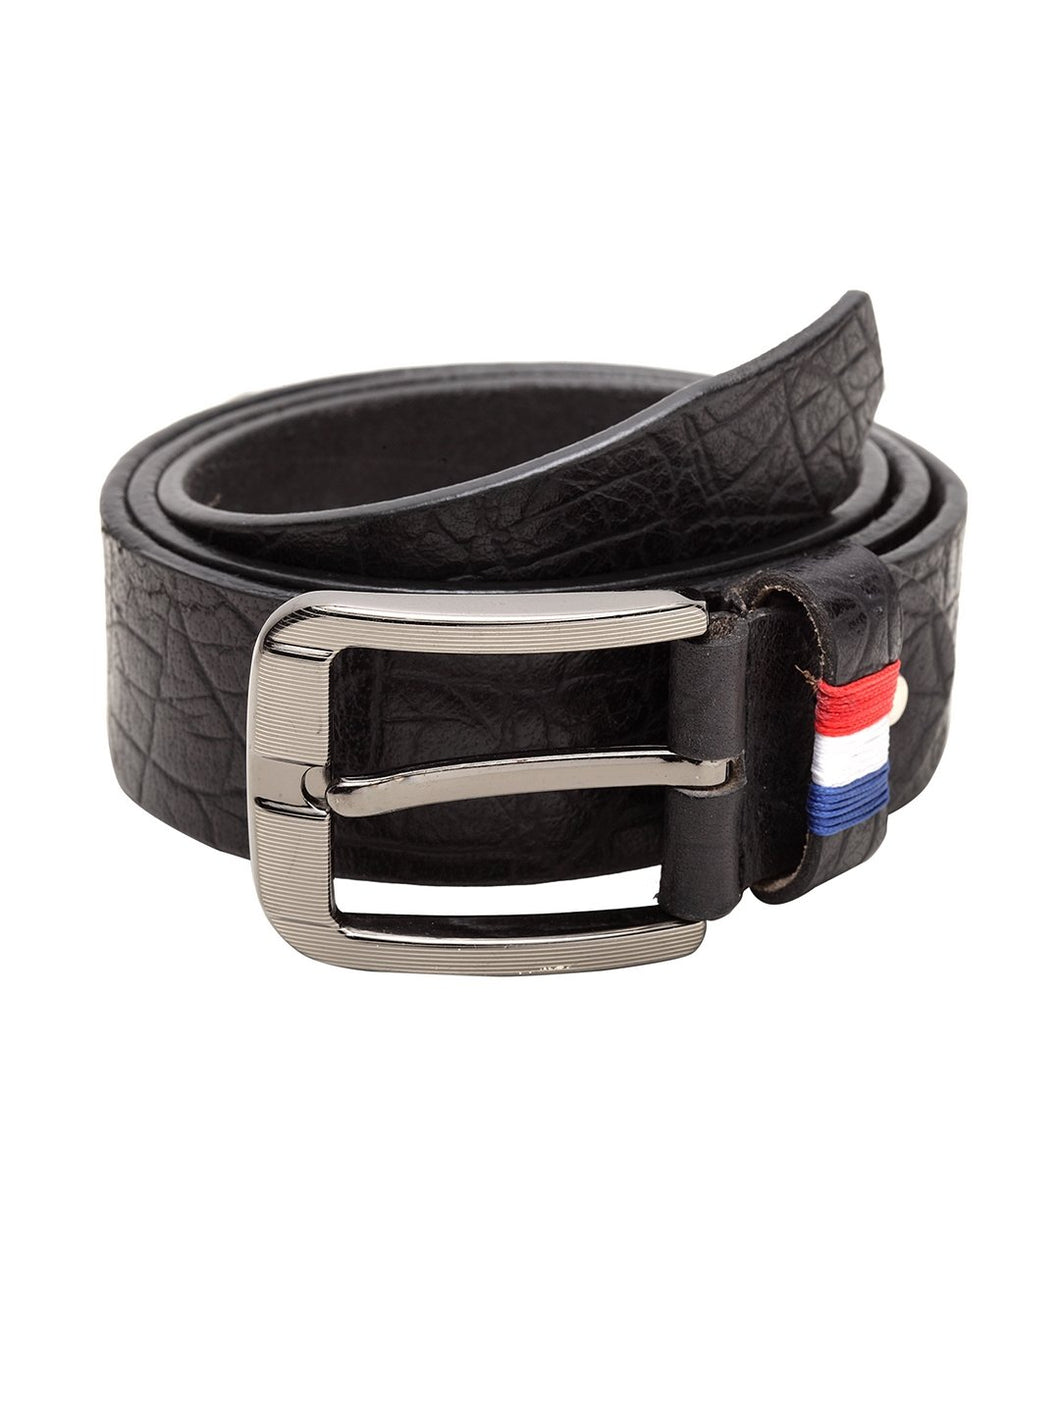 Teakwood Men Genuine Leather Black Solid Casual Belt